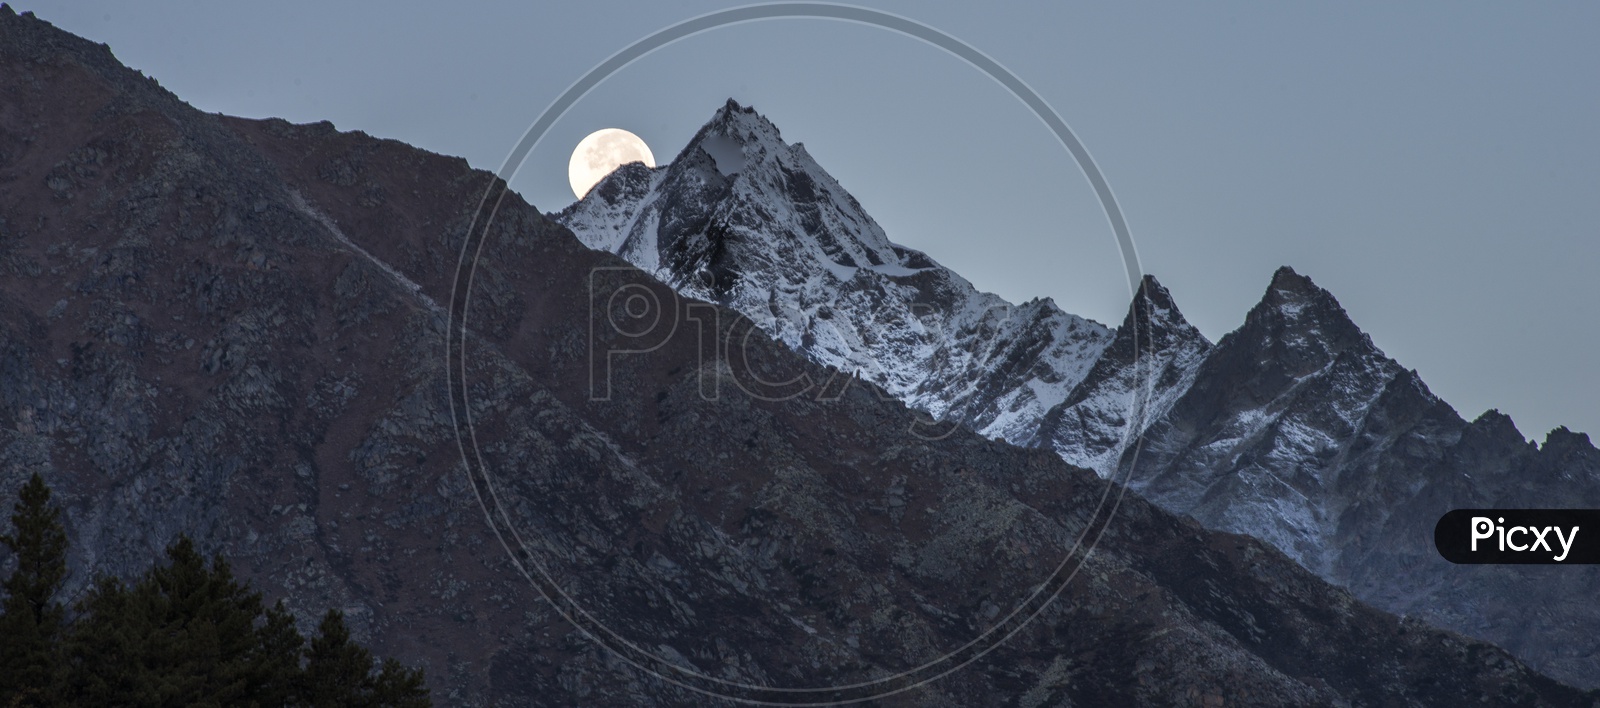 Moon Set at Chitkul Village